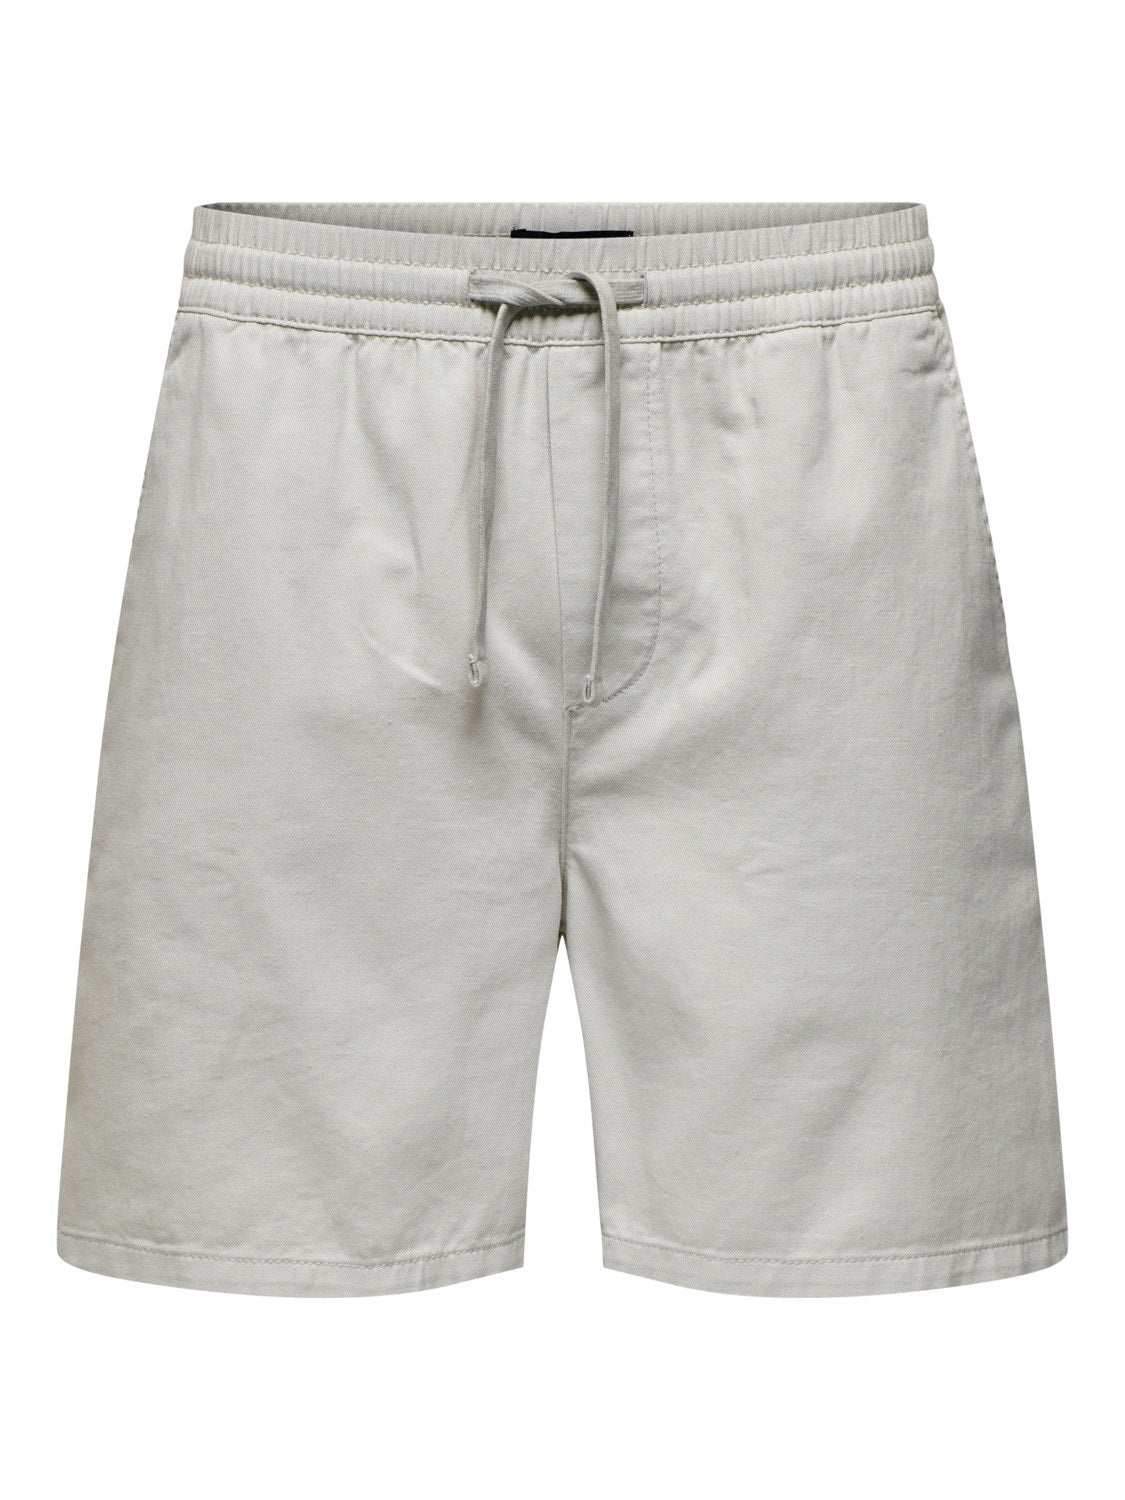 shorts-basic-22025790-only-sons-dm2-shop-04